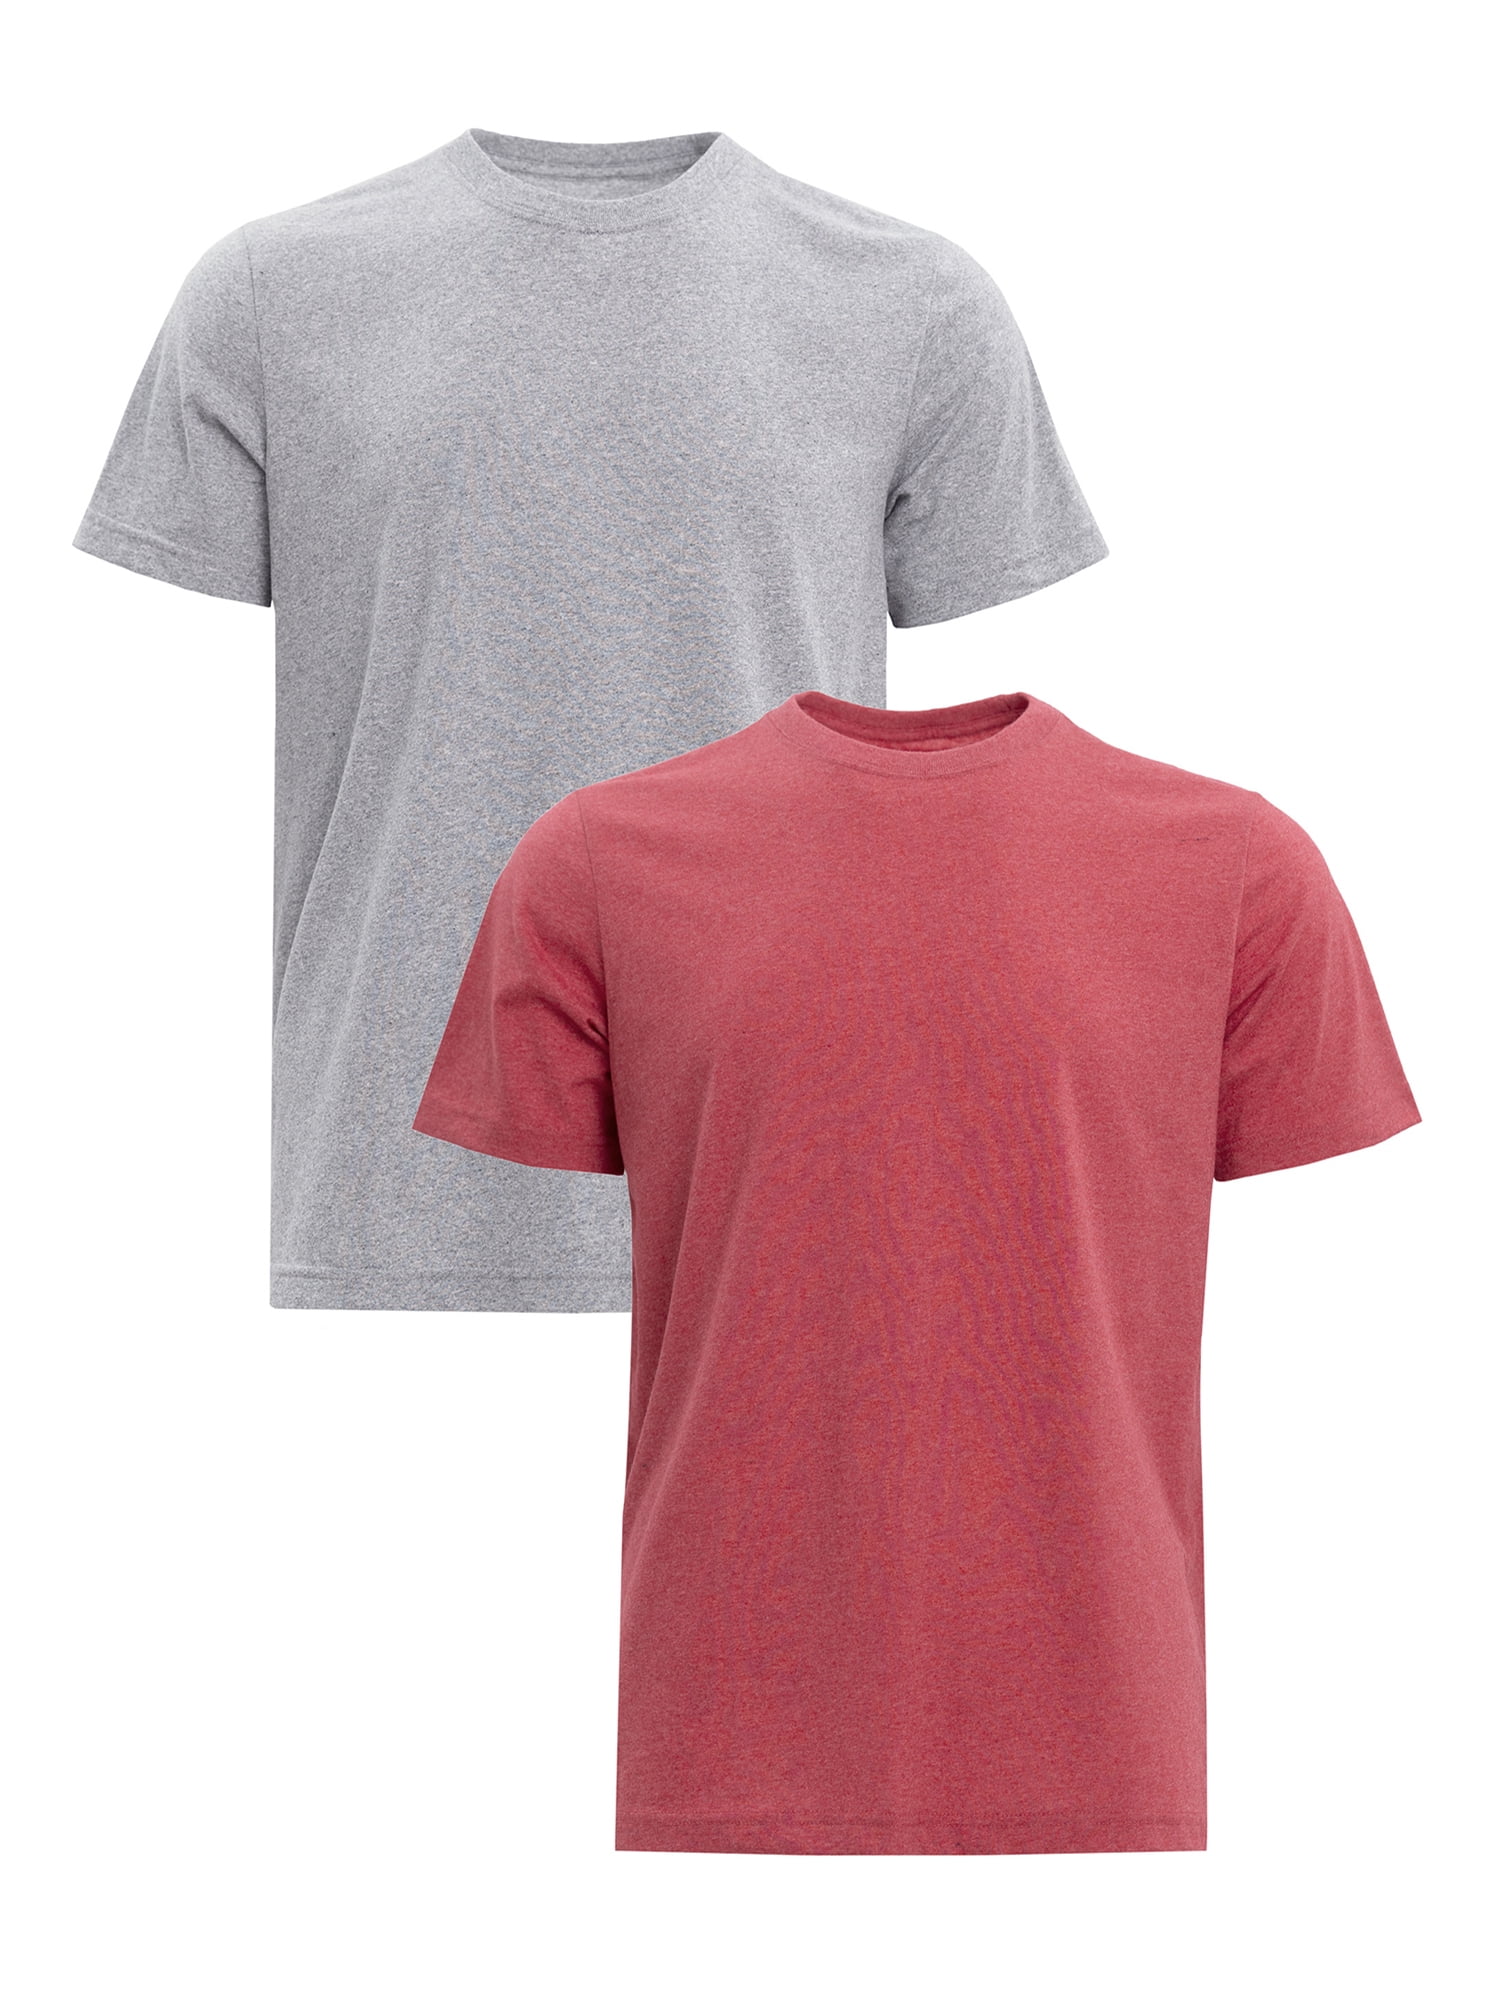 Fellow Interessant notifikation George Men's Short Sleeve T-Shirt, 2-Pack, Sizes XS-3XL - Walmart.com